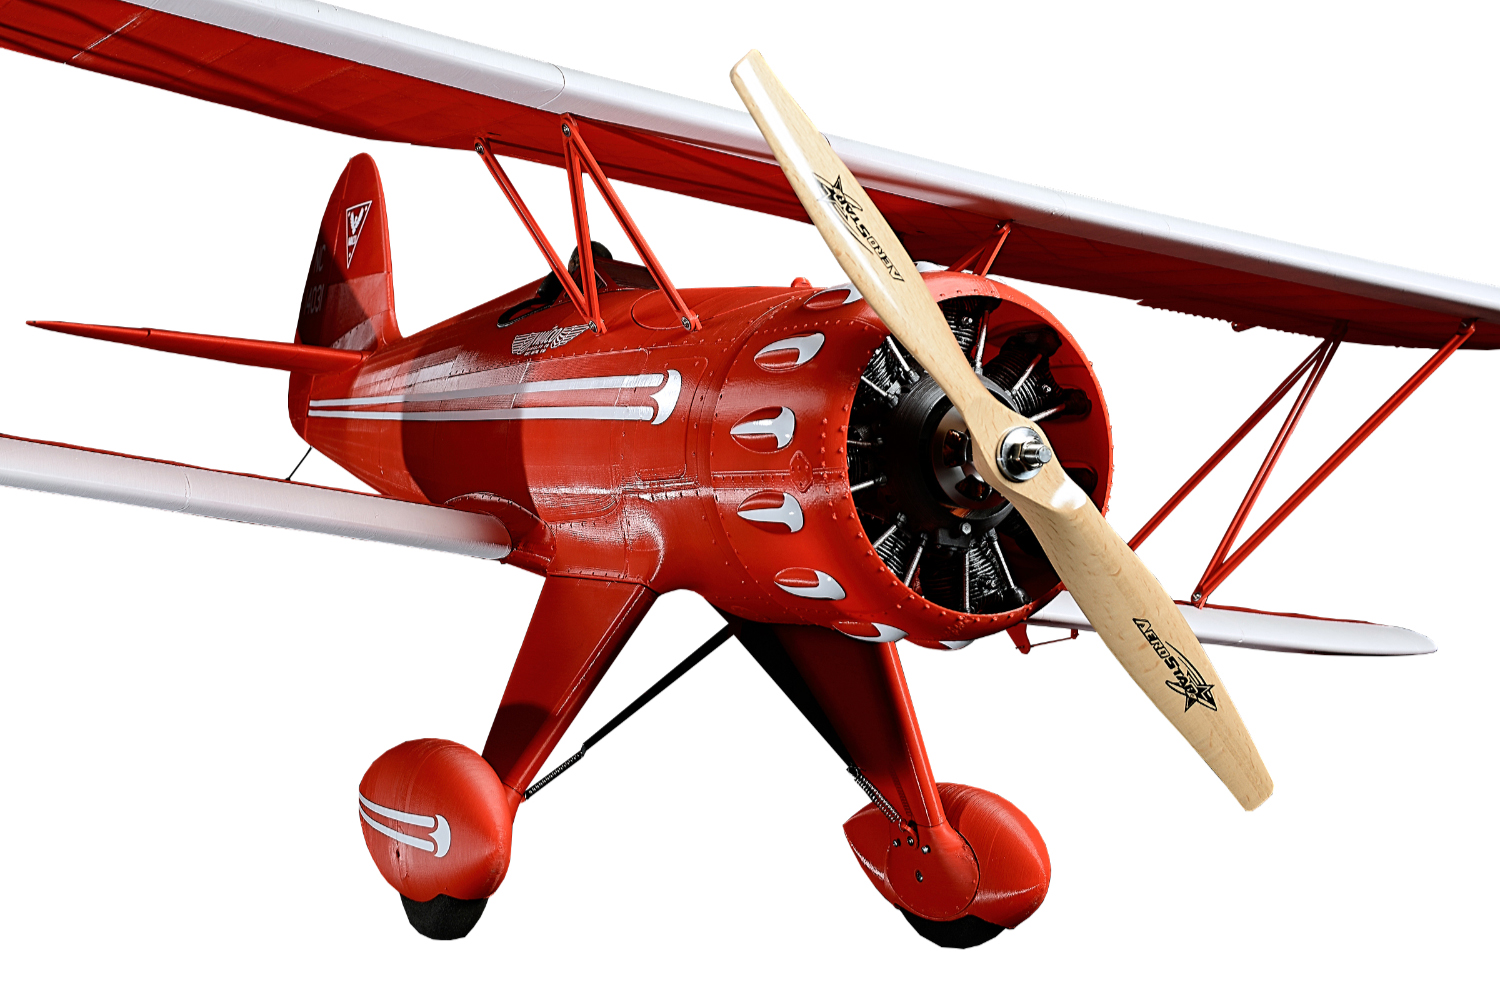 TOP 5 vidéos de la semaine : Un avion imprimé en 3D - 3Dnatives